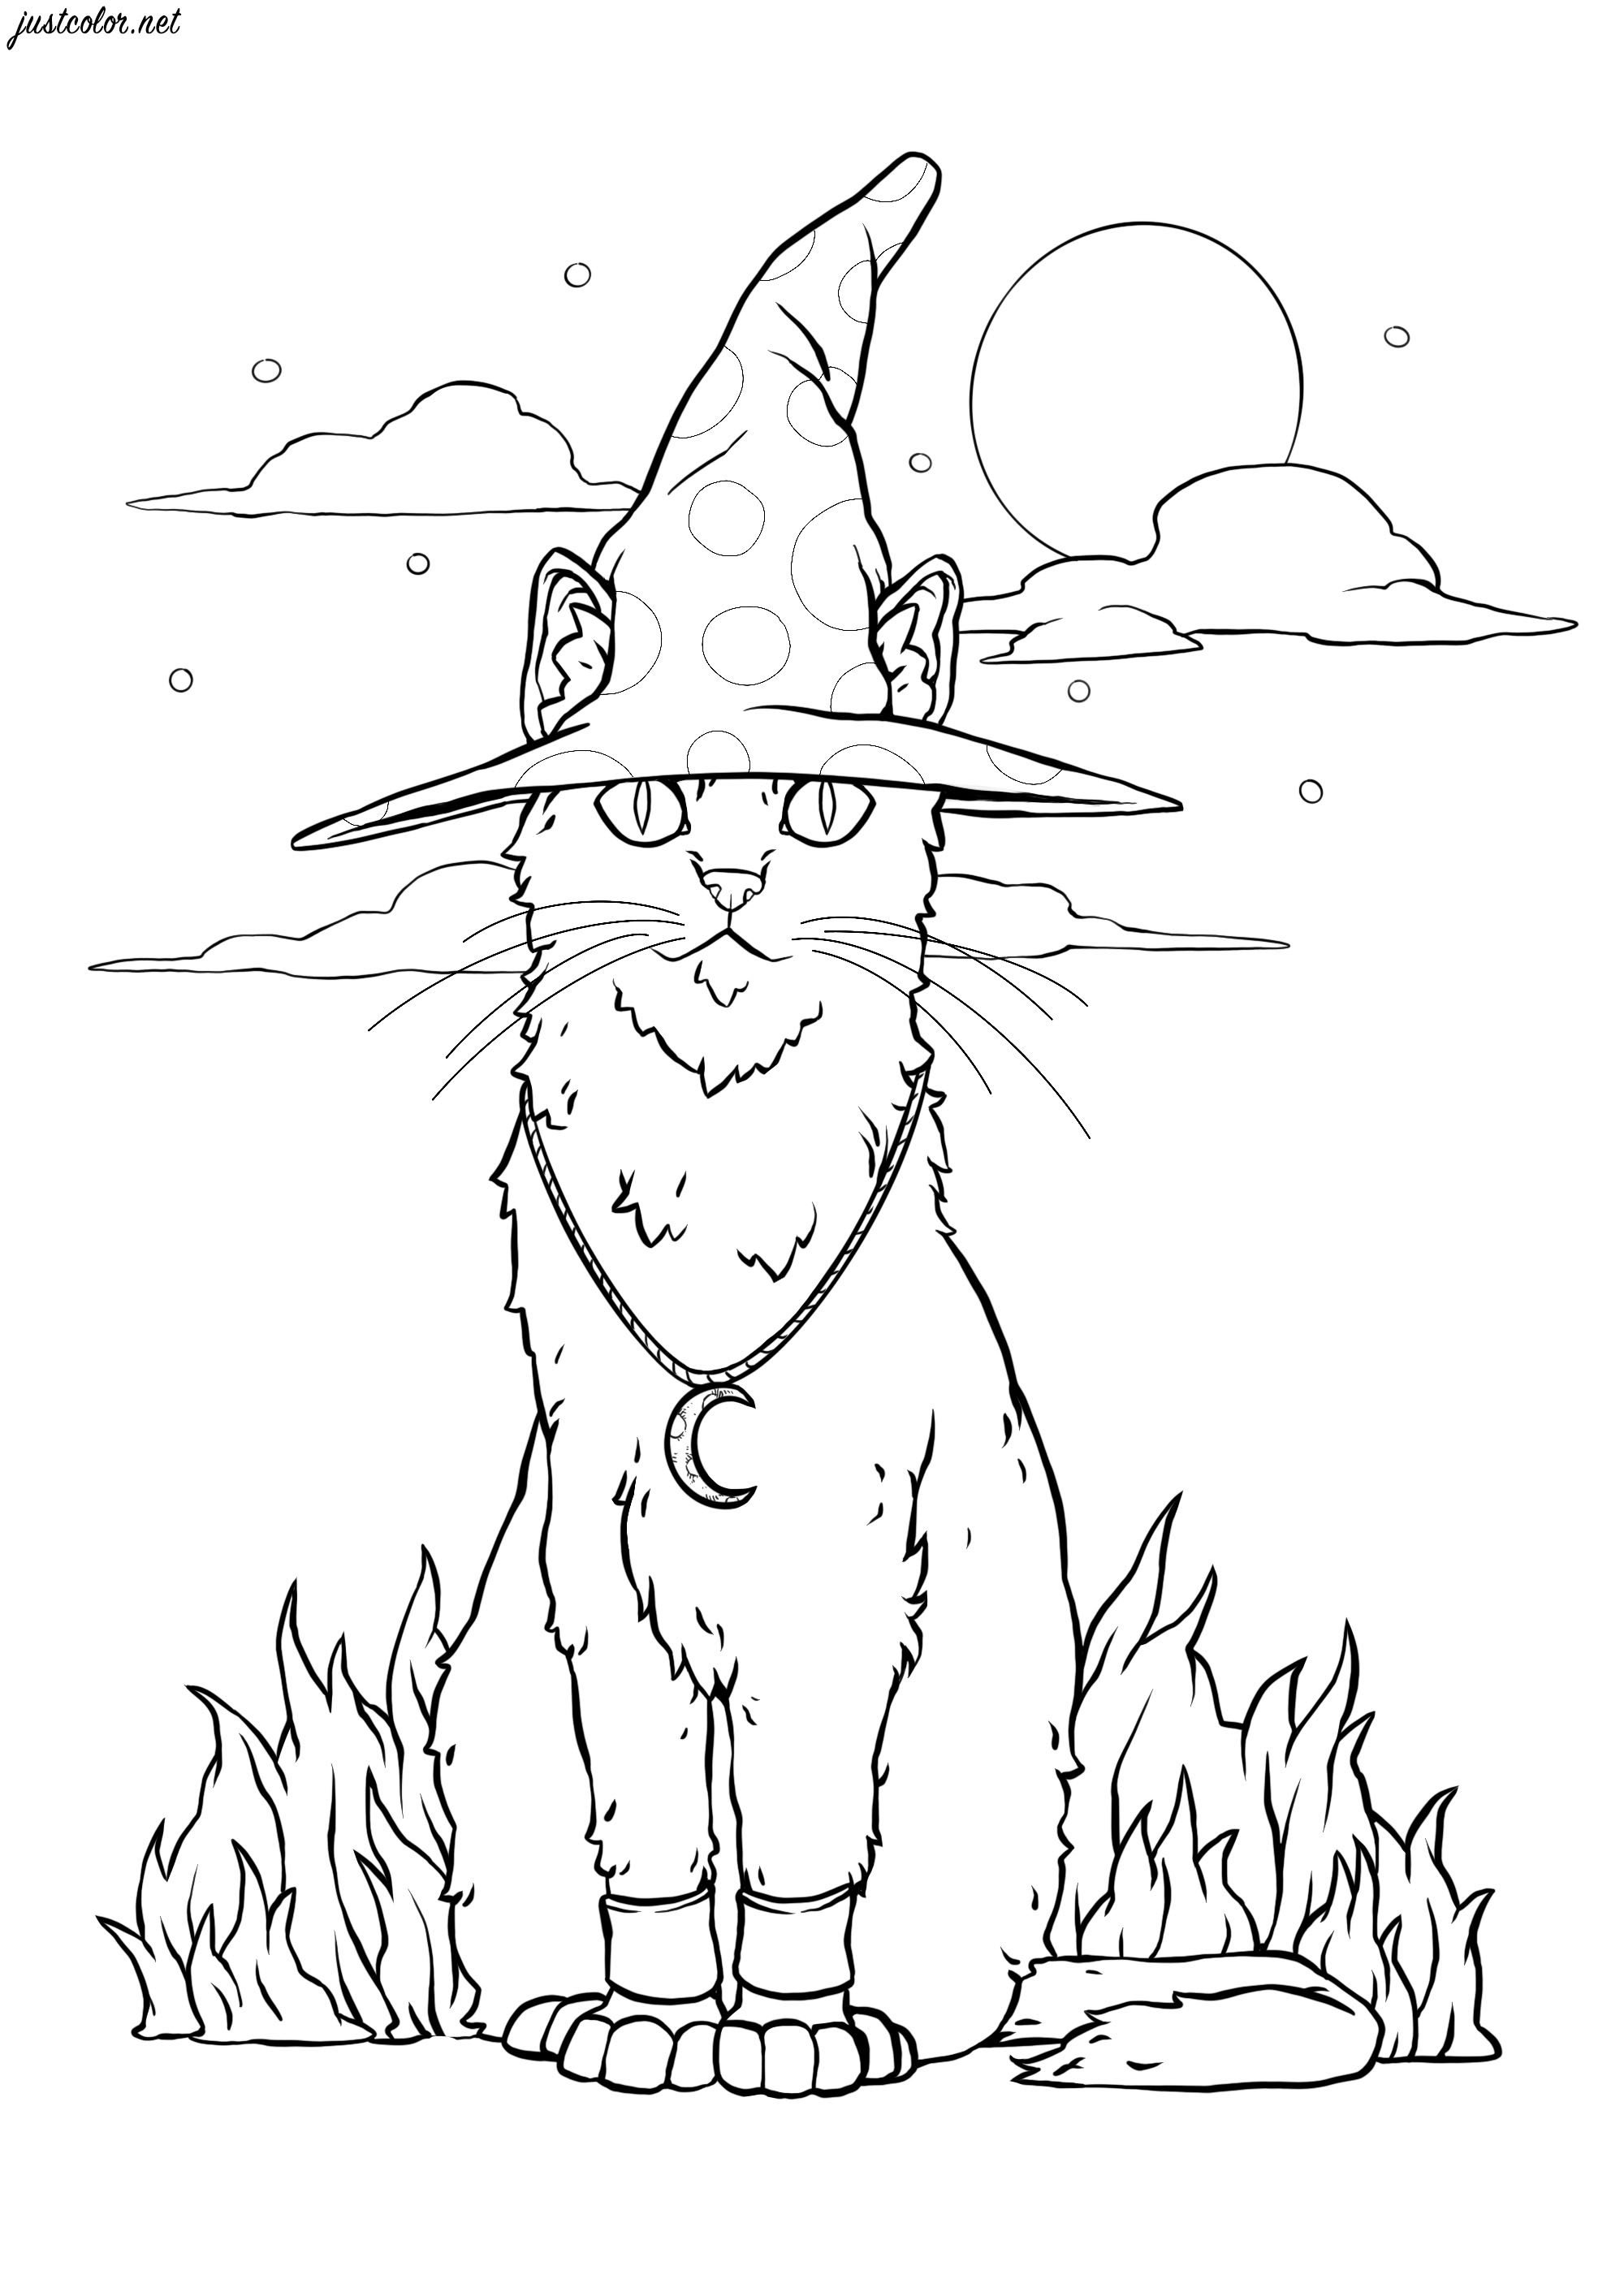 A wizard transformed into a mischievous cat ... A wizard has been transformed into a cat... It's up to you to color him back into his original form!, Artist : SPZ artworks